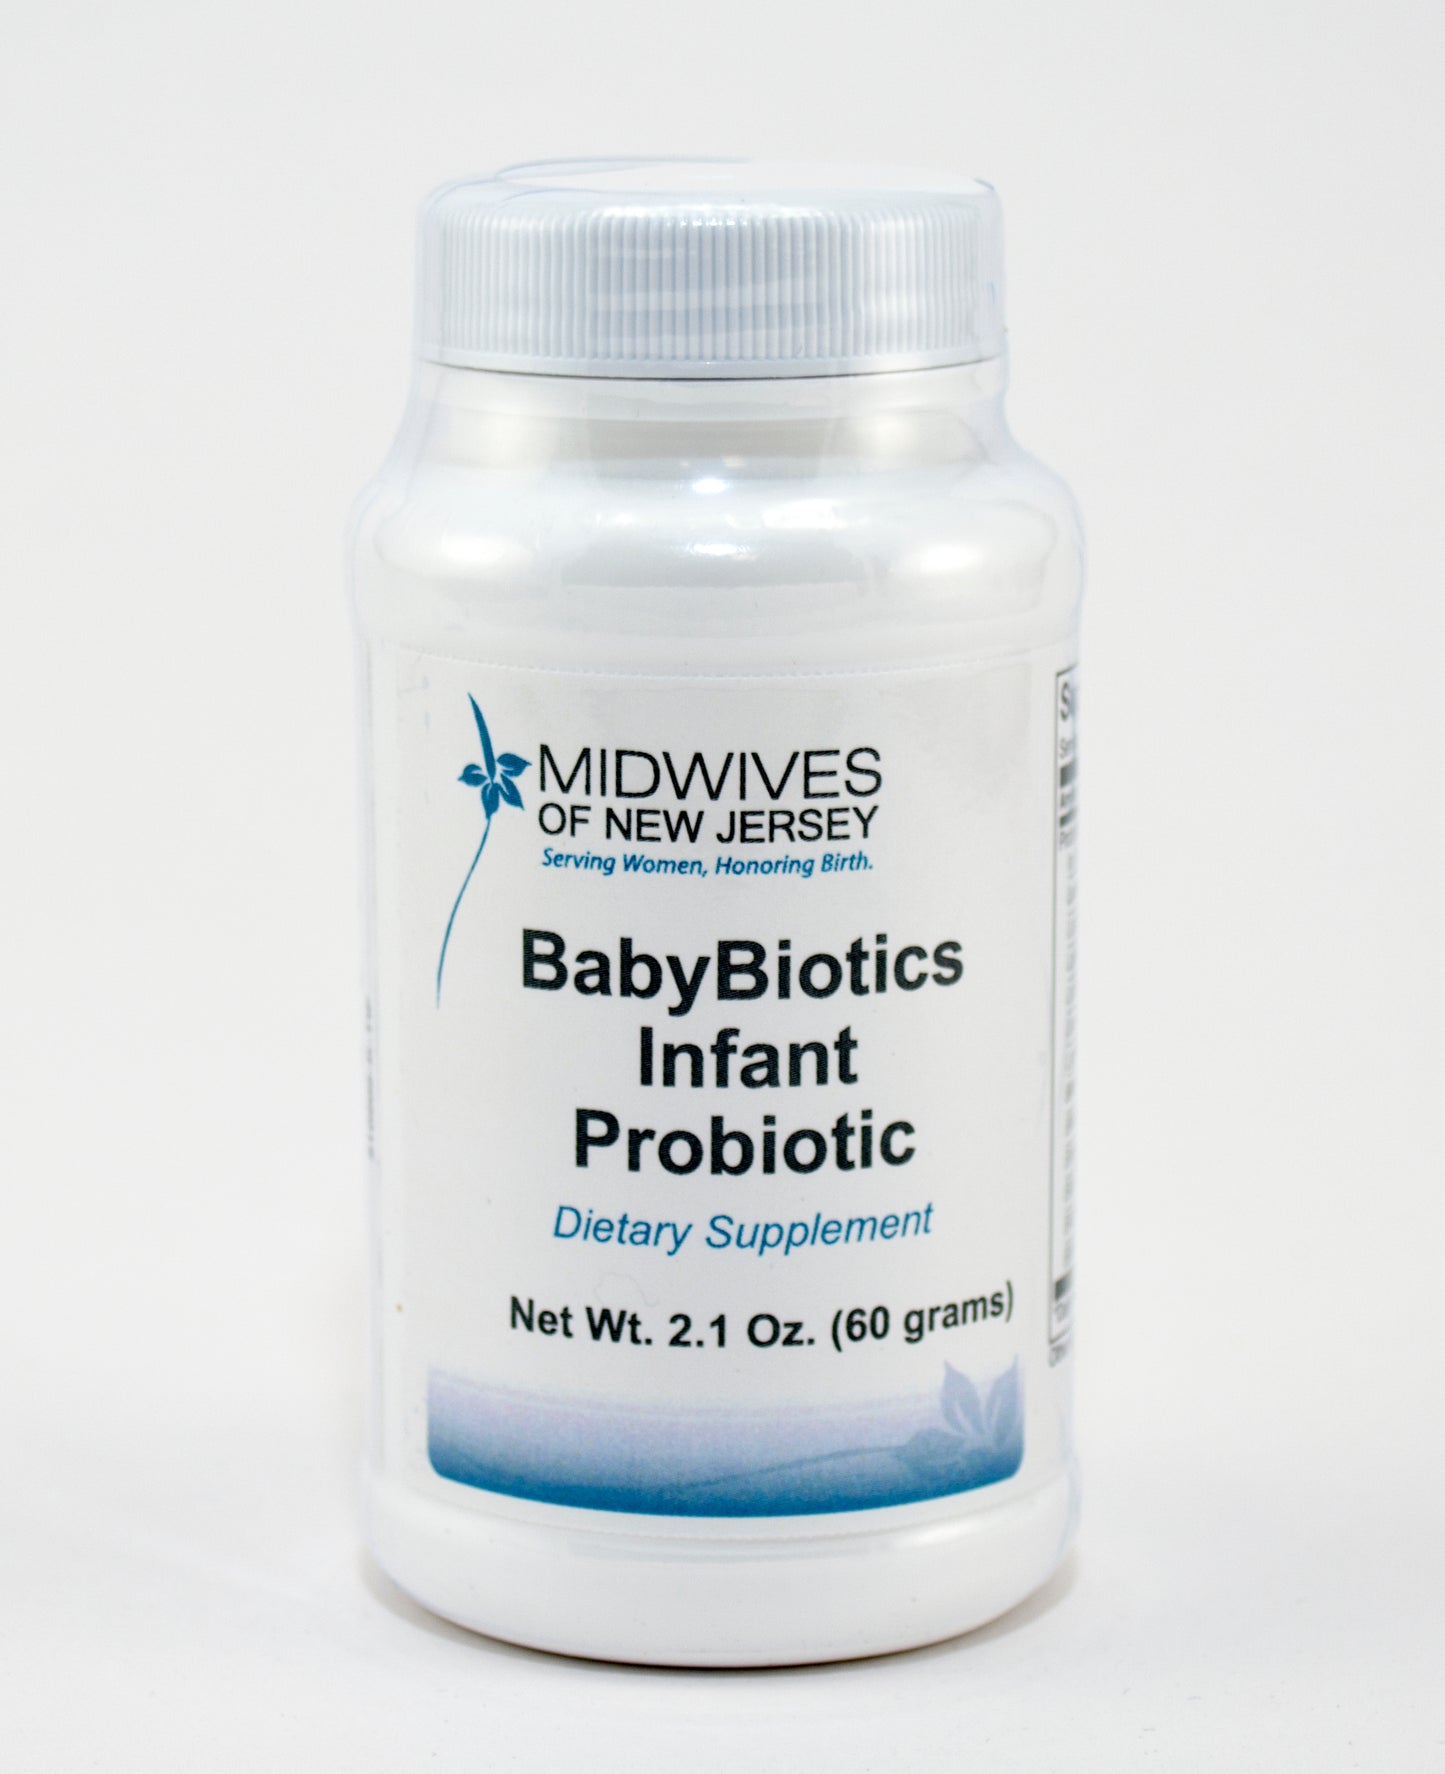 BabyBiotics Infant Probiotic